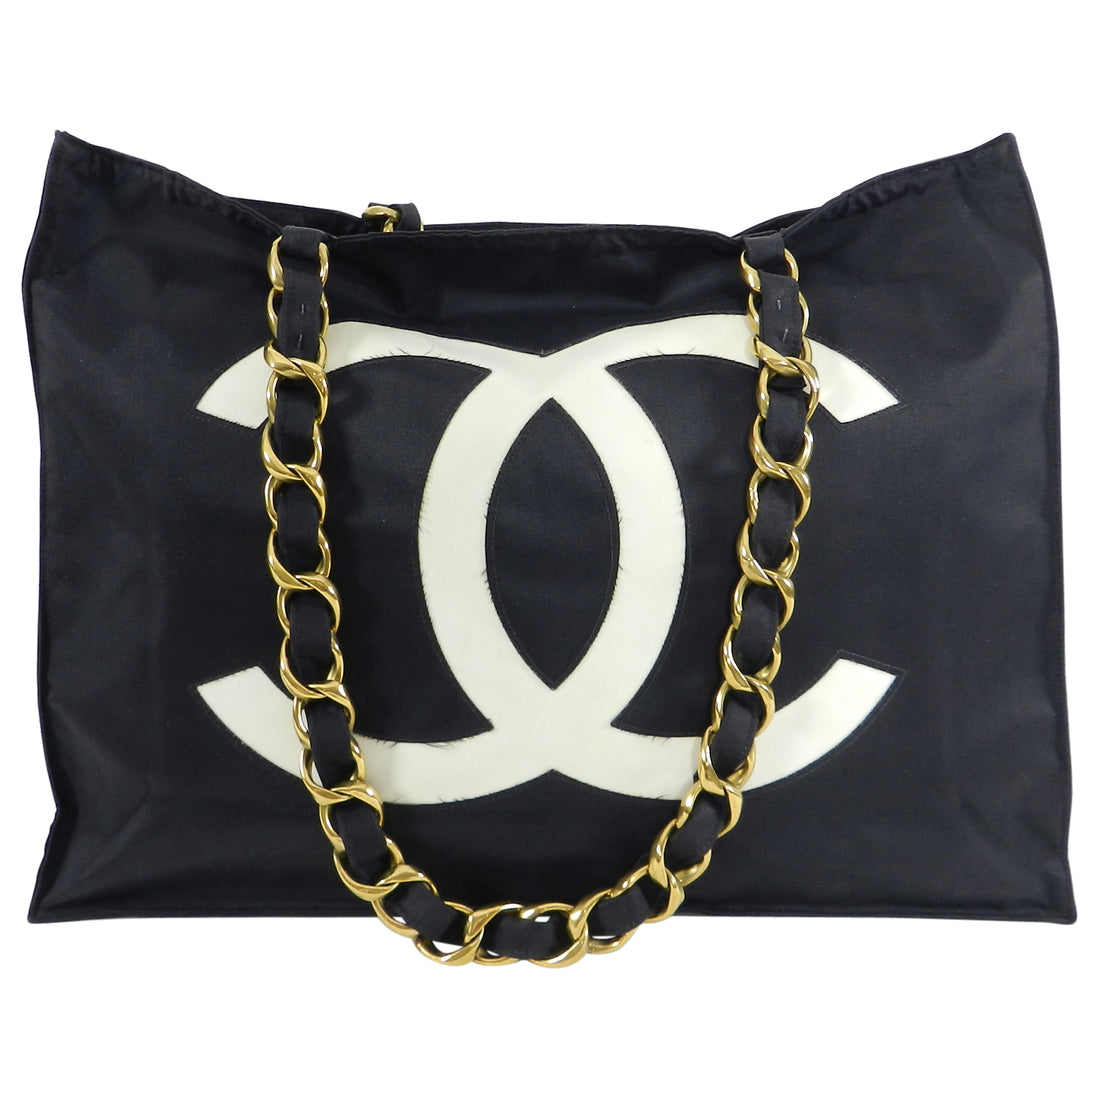 Chanel Vintage 1991 Black Nylon CC Logo Tote Bag with Gold Chain Straps